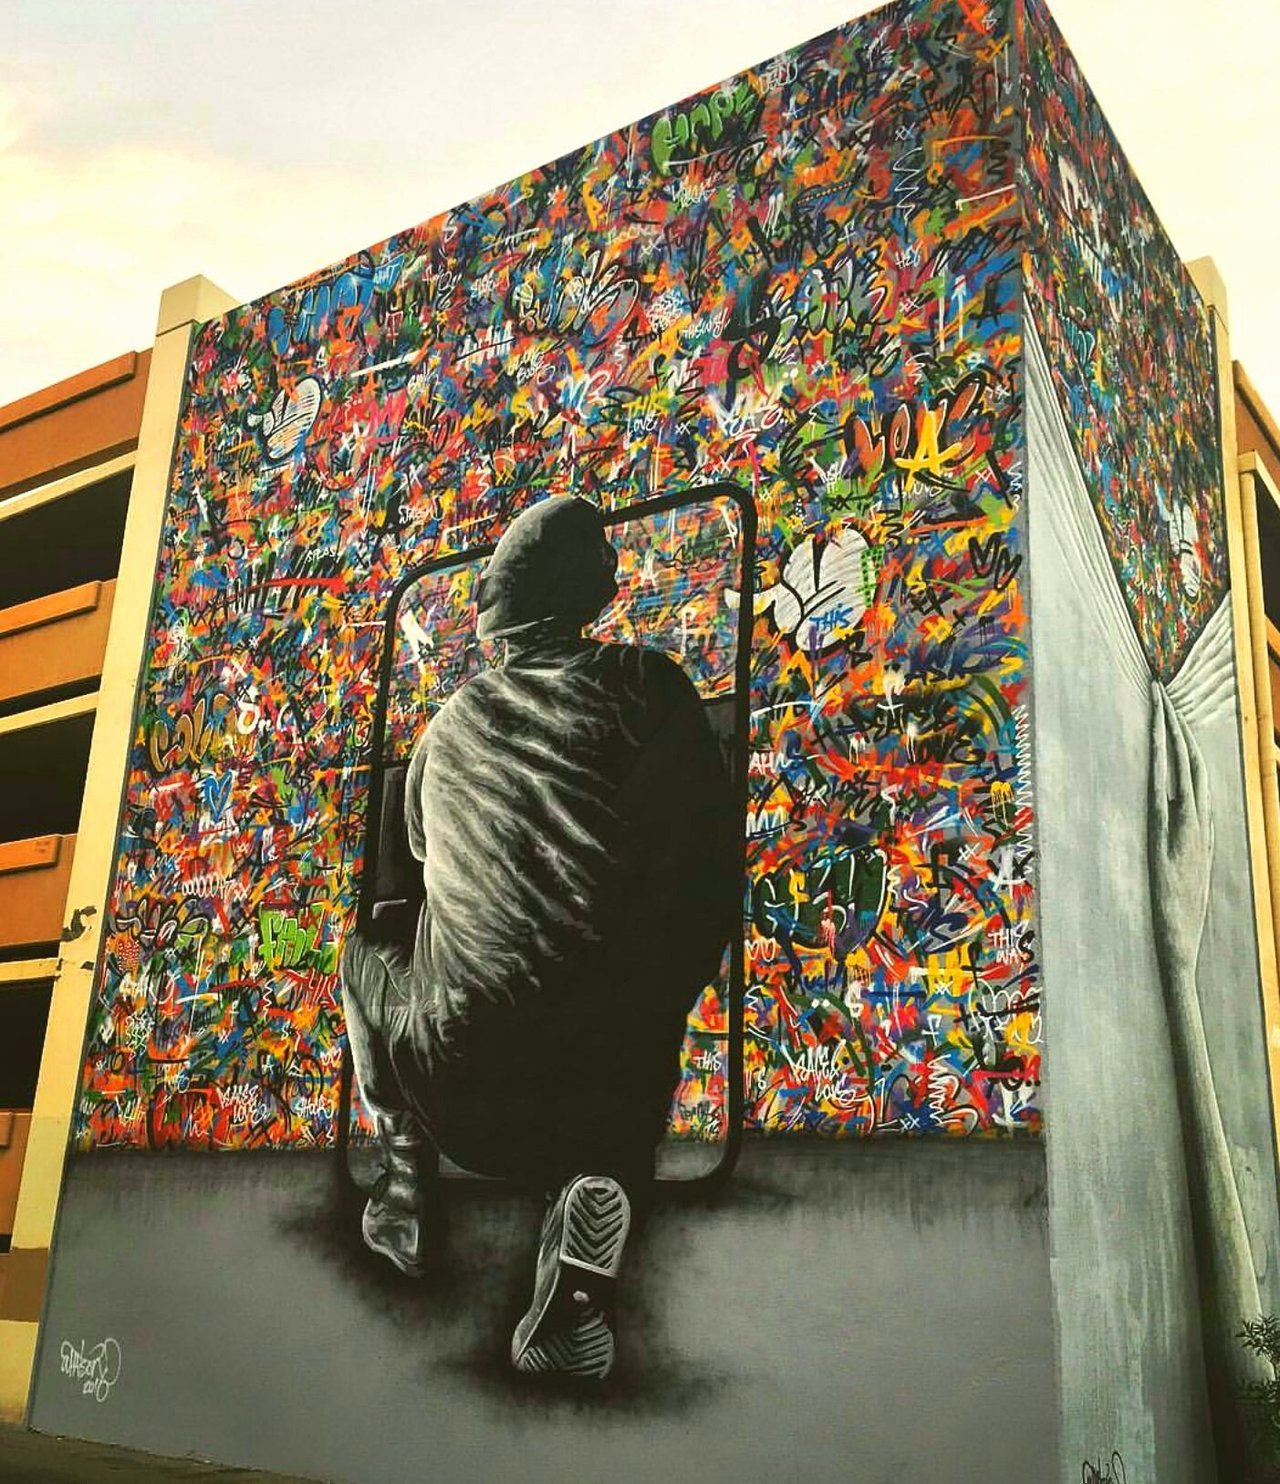 Impressive piece by @martinwhatson in #downtownlasvegas #justkidsofficial #streetart #art #contemporaryart https://t.co/H8VWMHQxZr